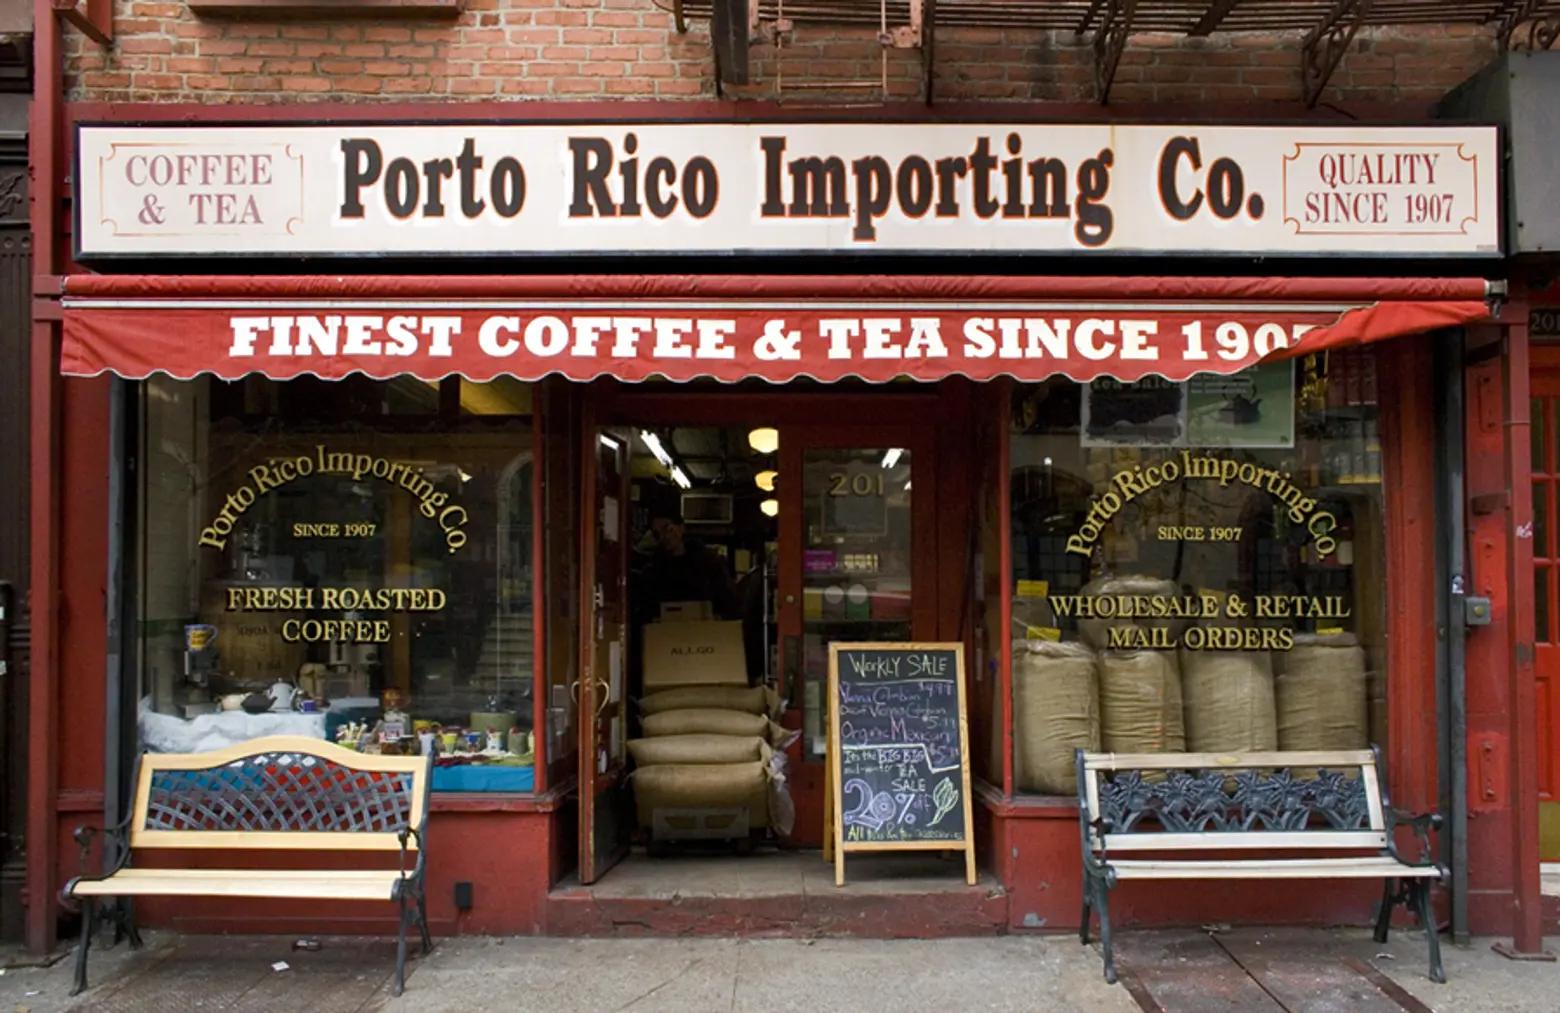 PORTO RICO IMPORTING CO, NYC Signage